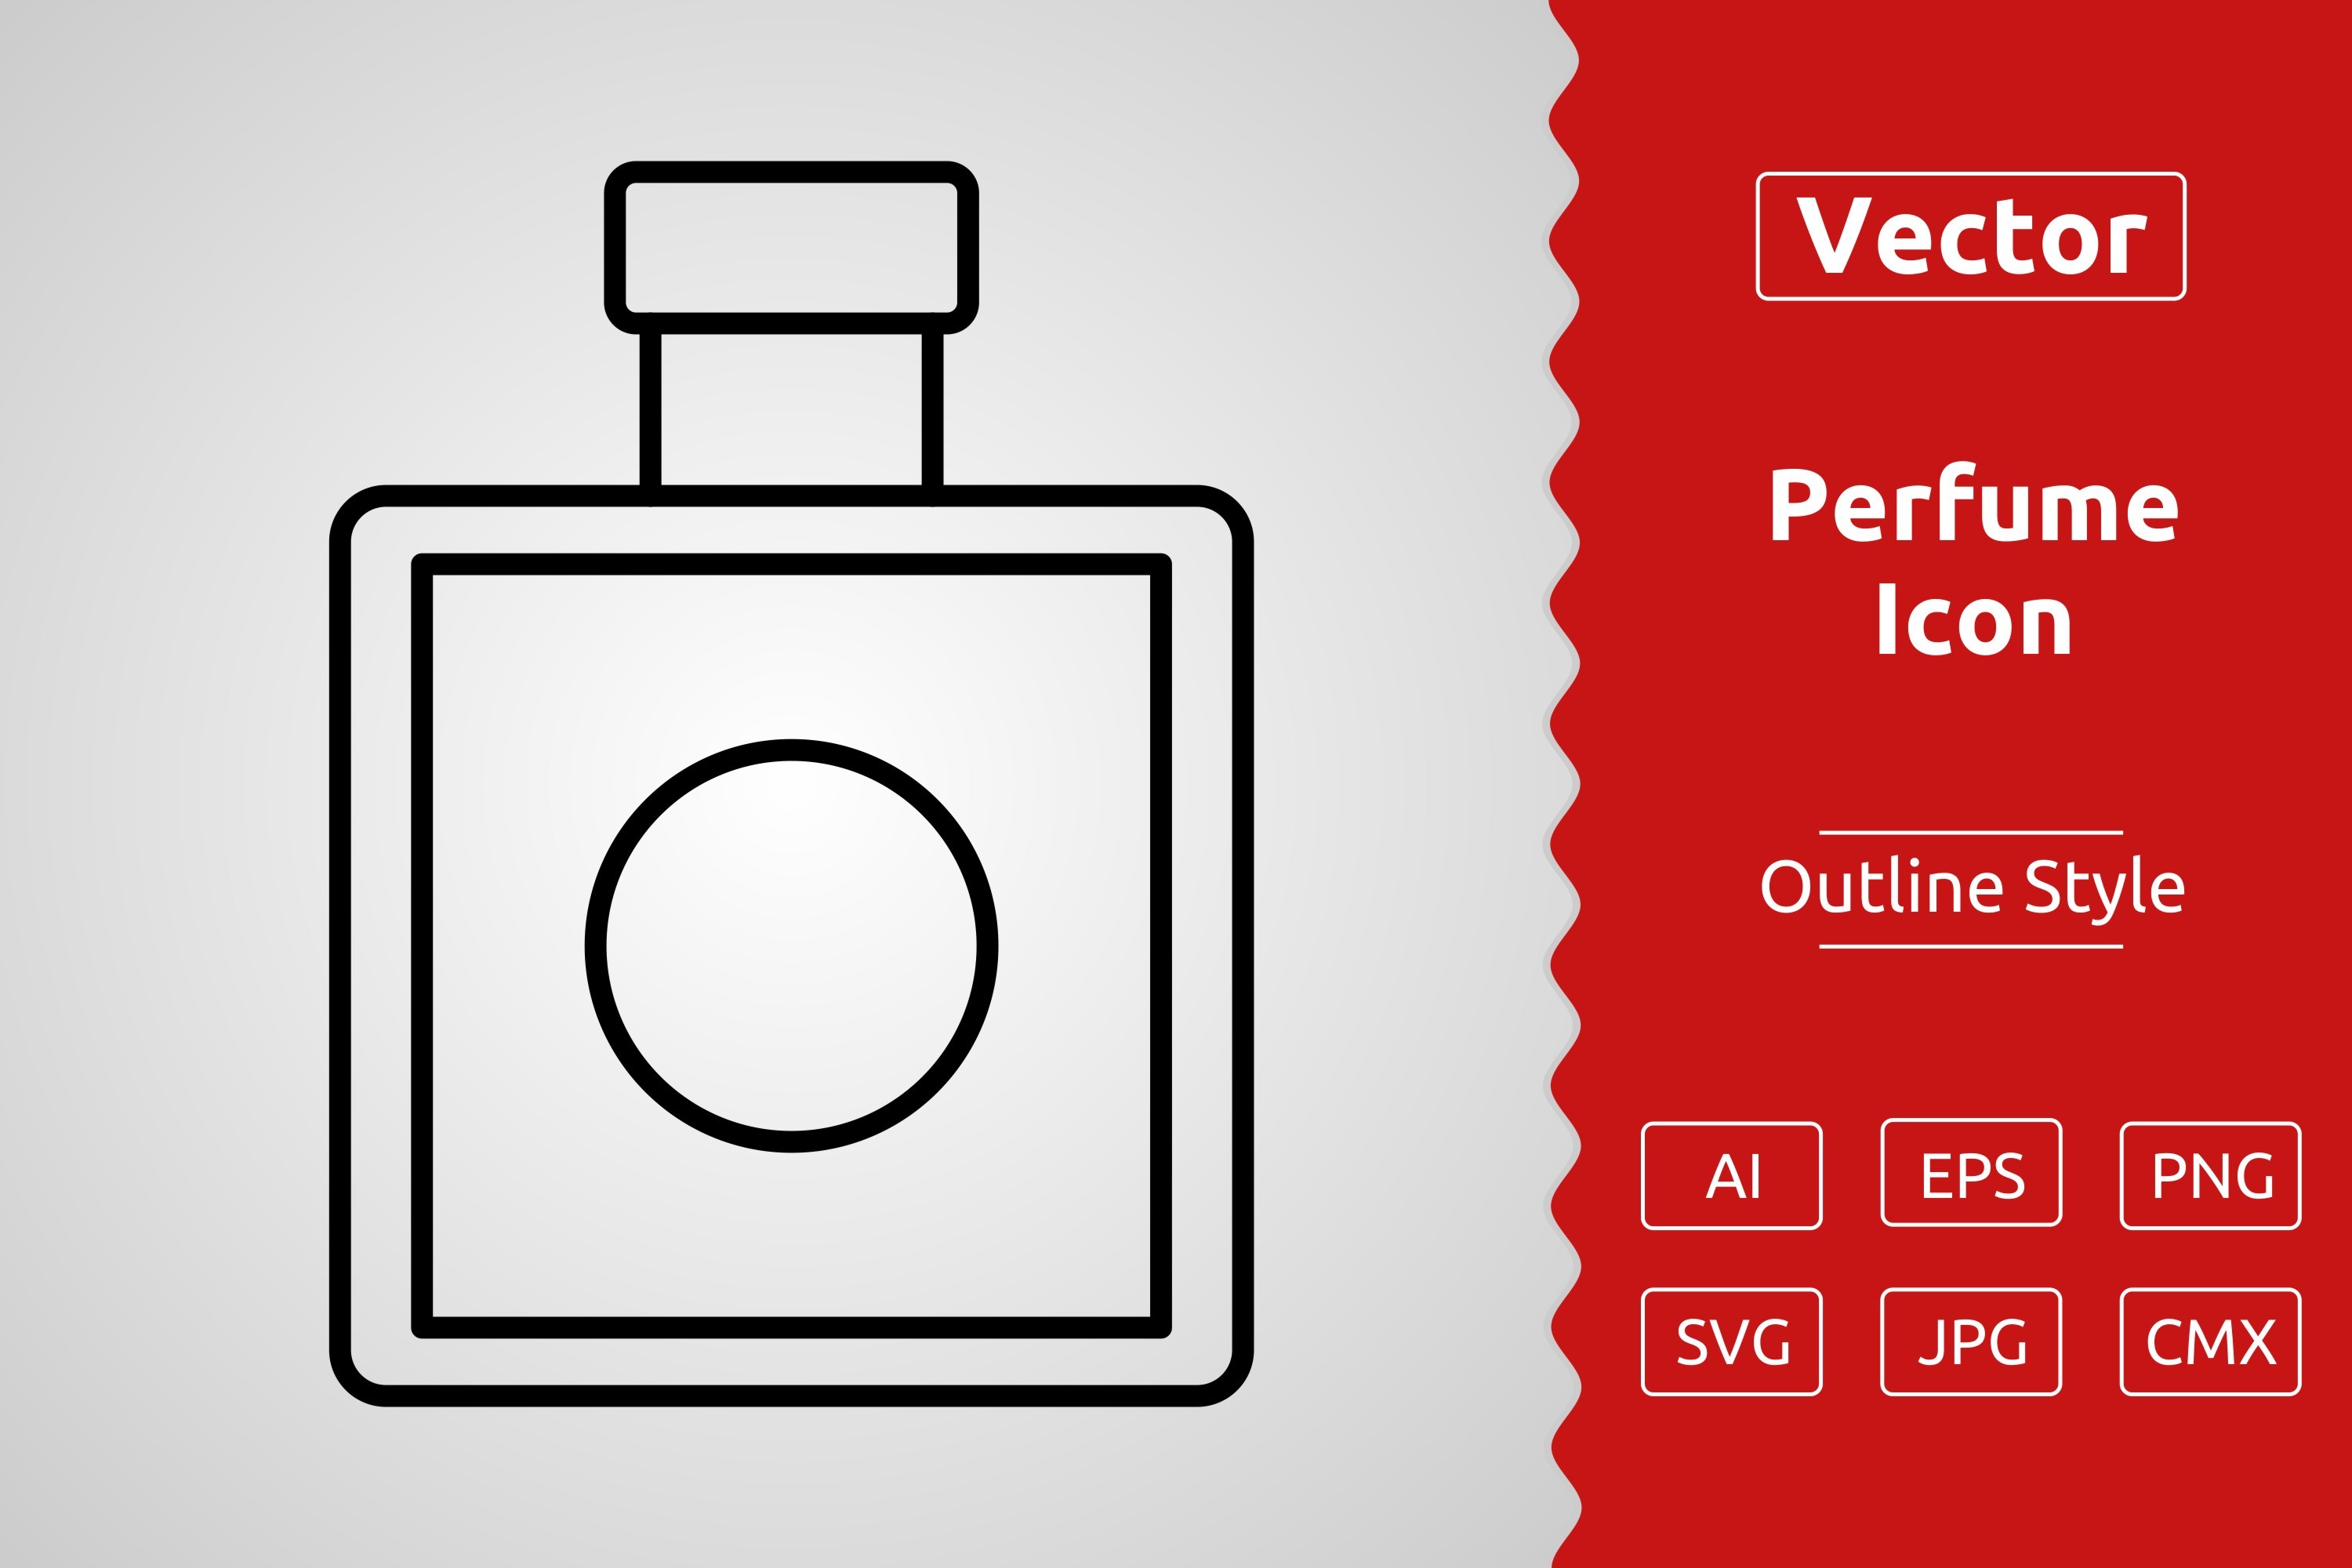 Modern perfume icons vector image on VectorStock